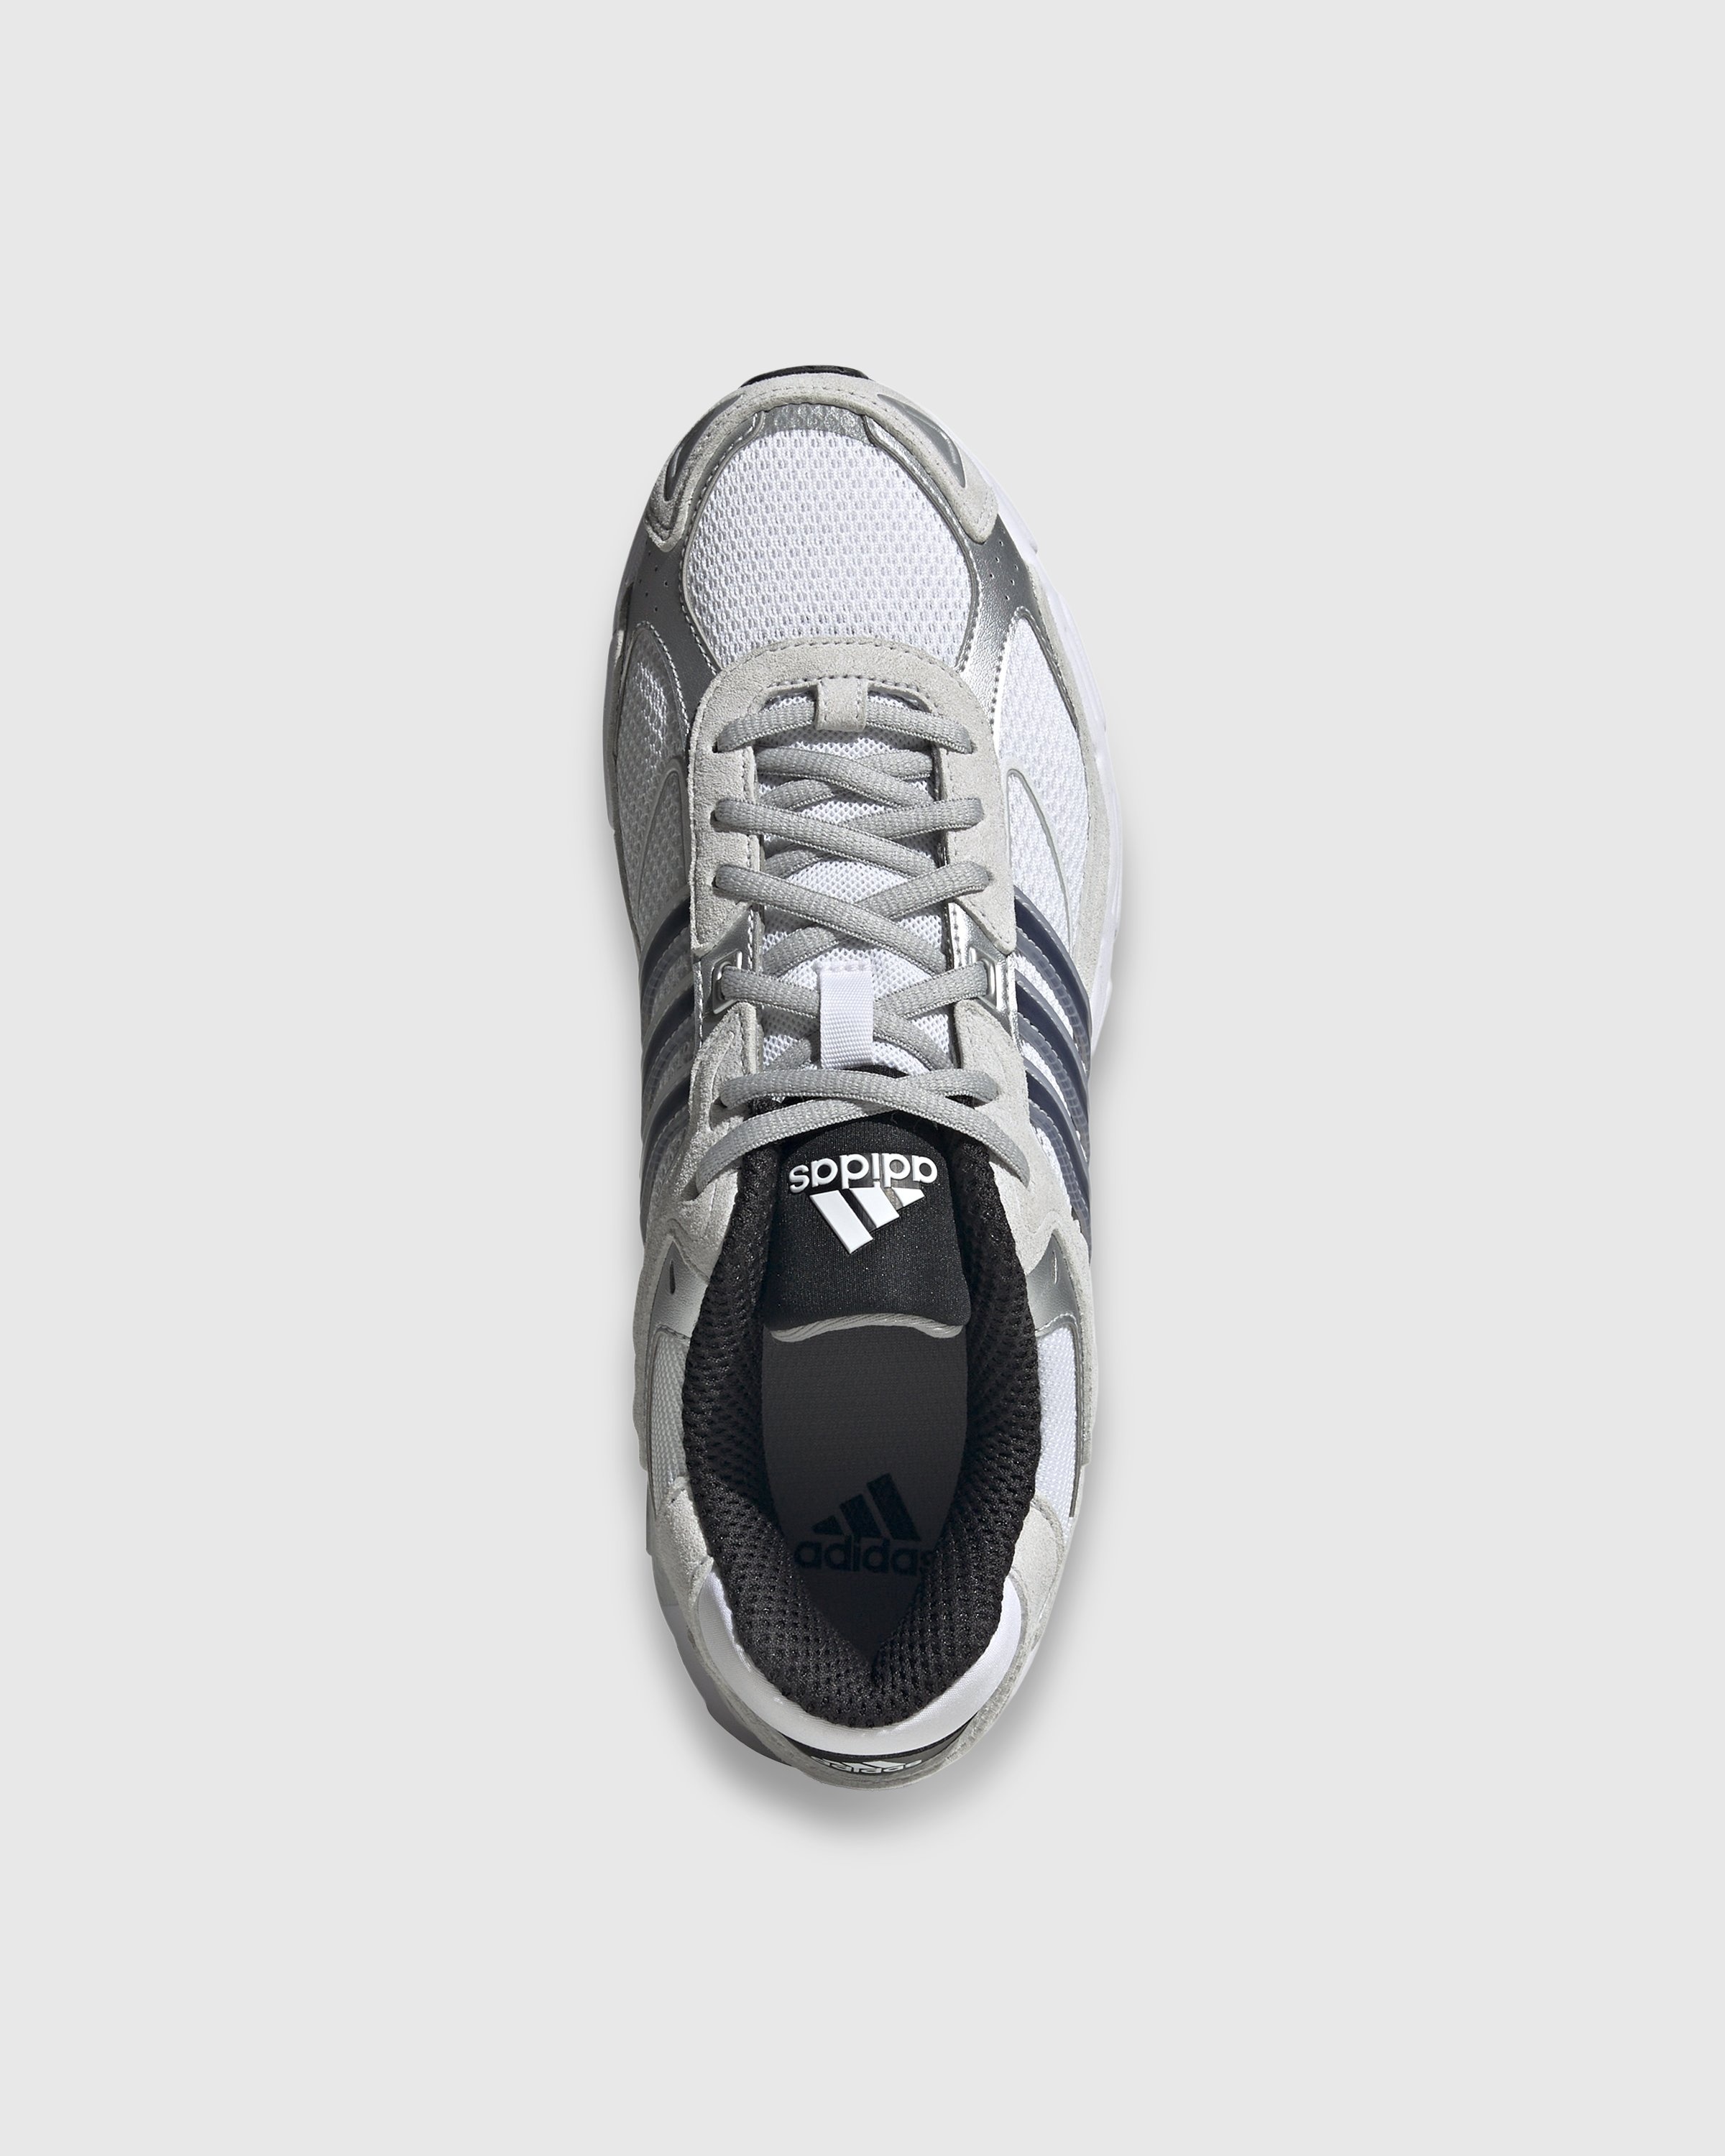 Adidas – Response Shop White/Black CL | Highsnobiety